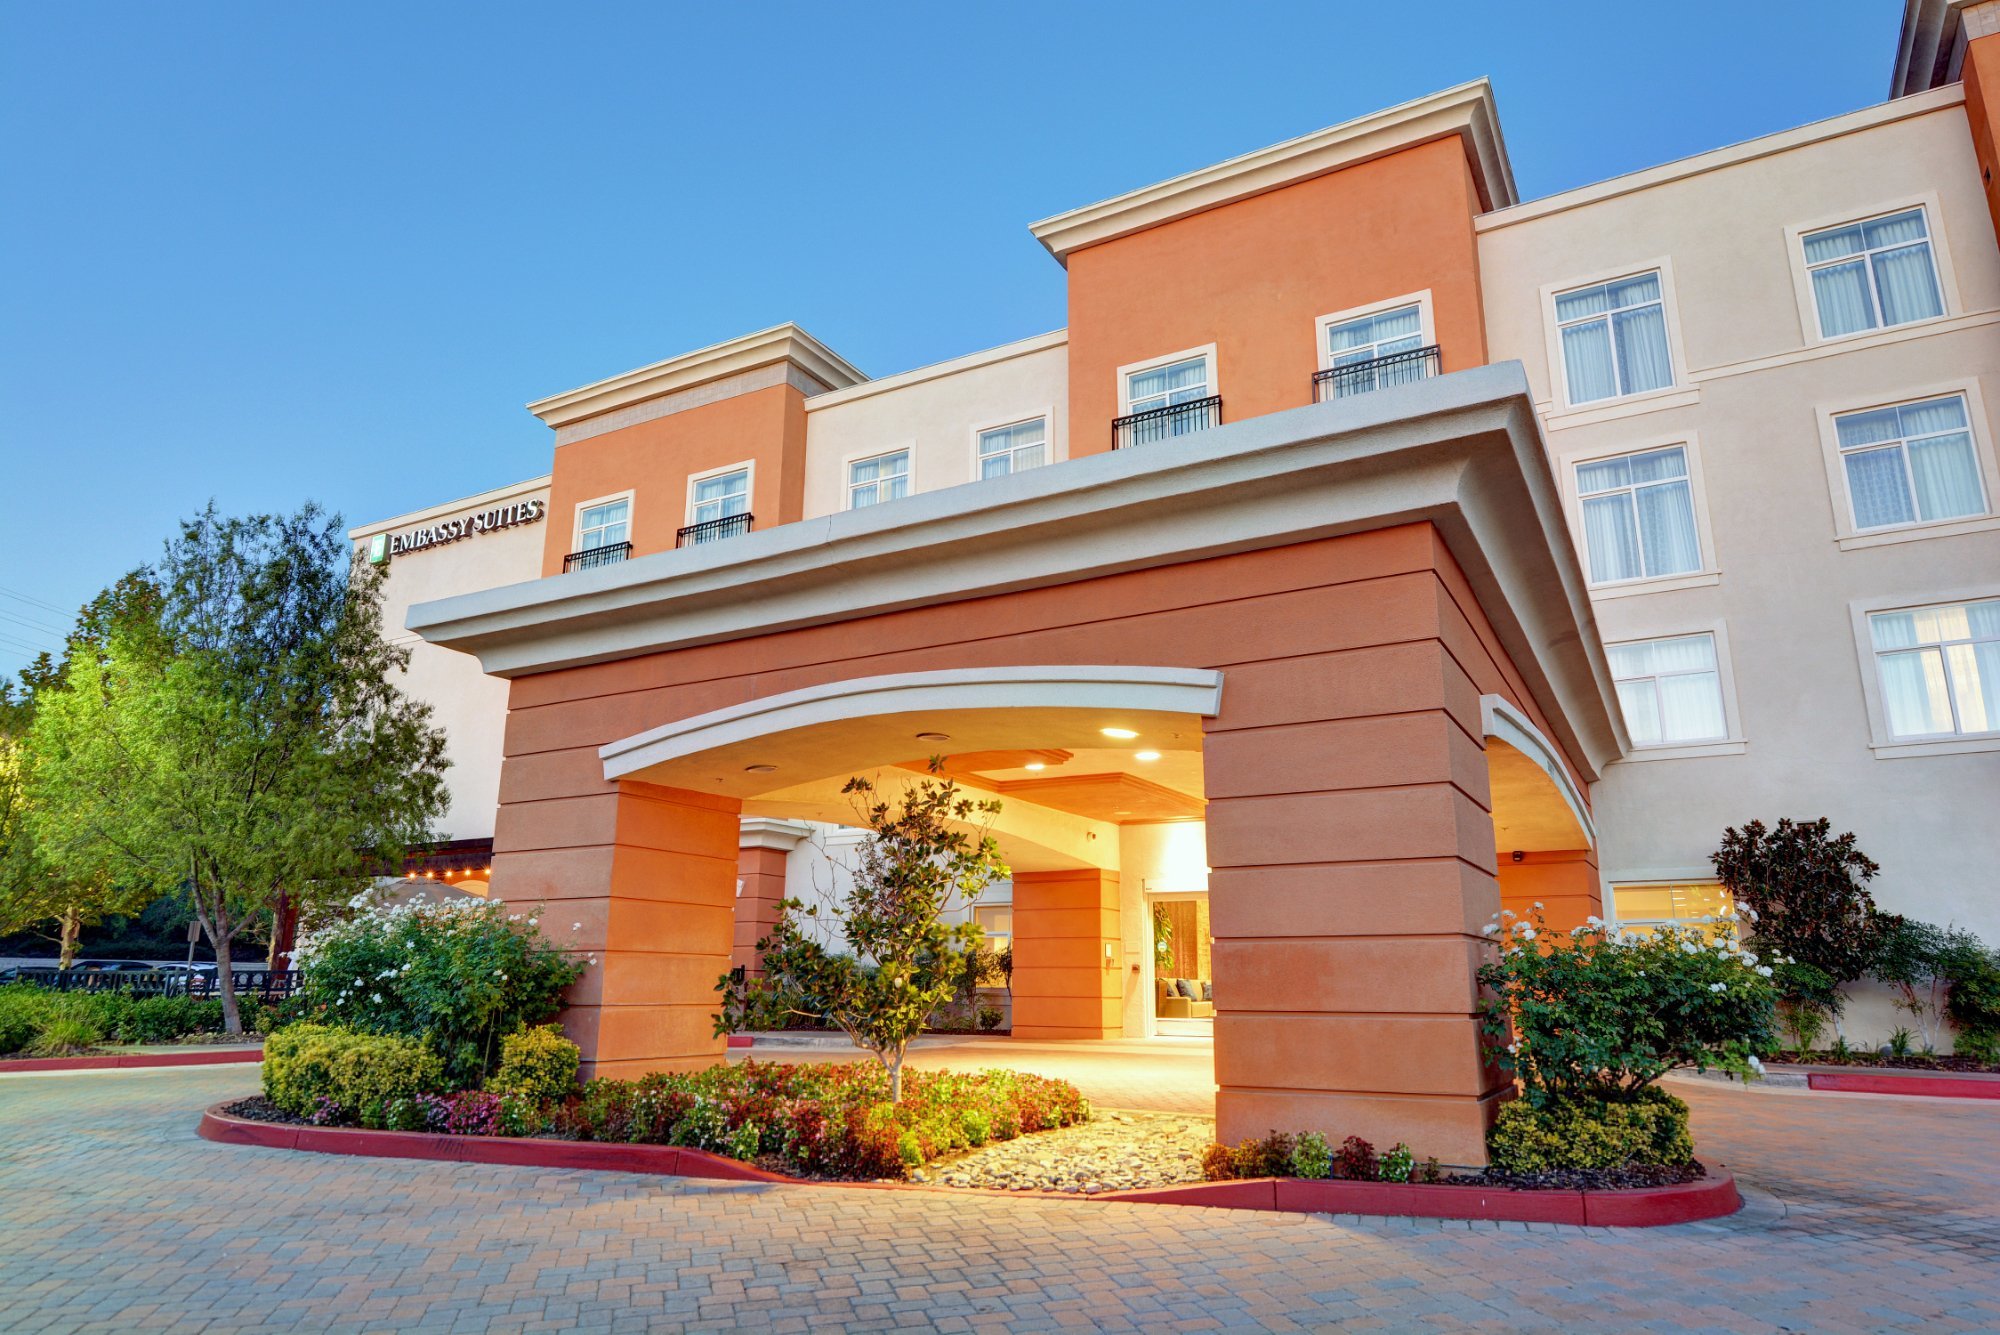 Photo of Embassy Suites by Hilton Valencia, Valencia, CA